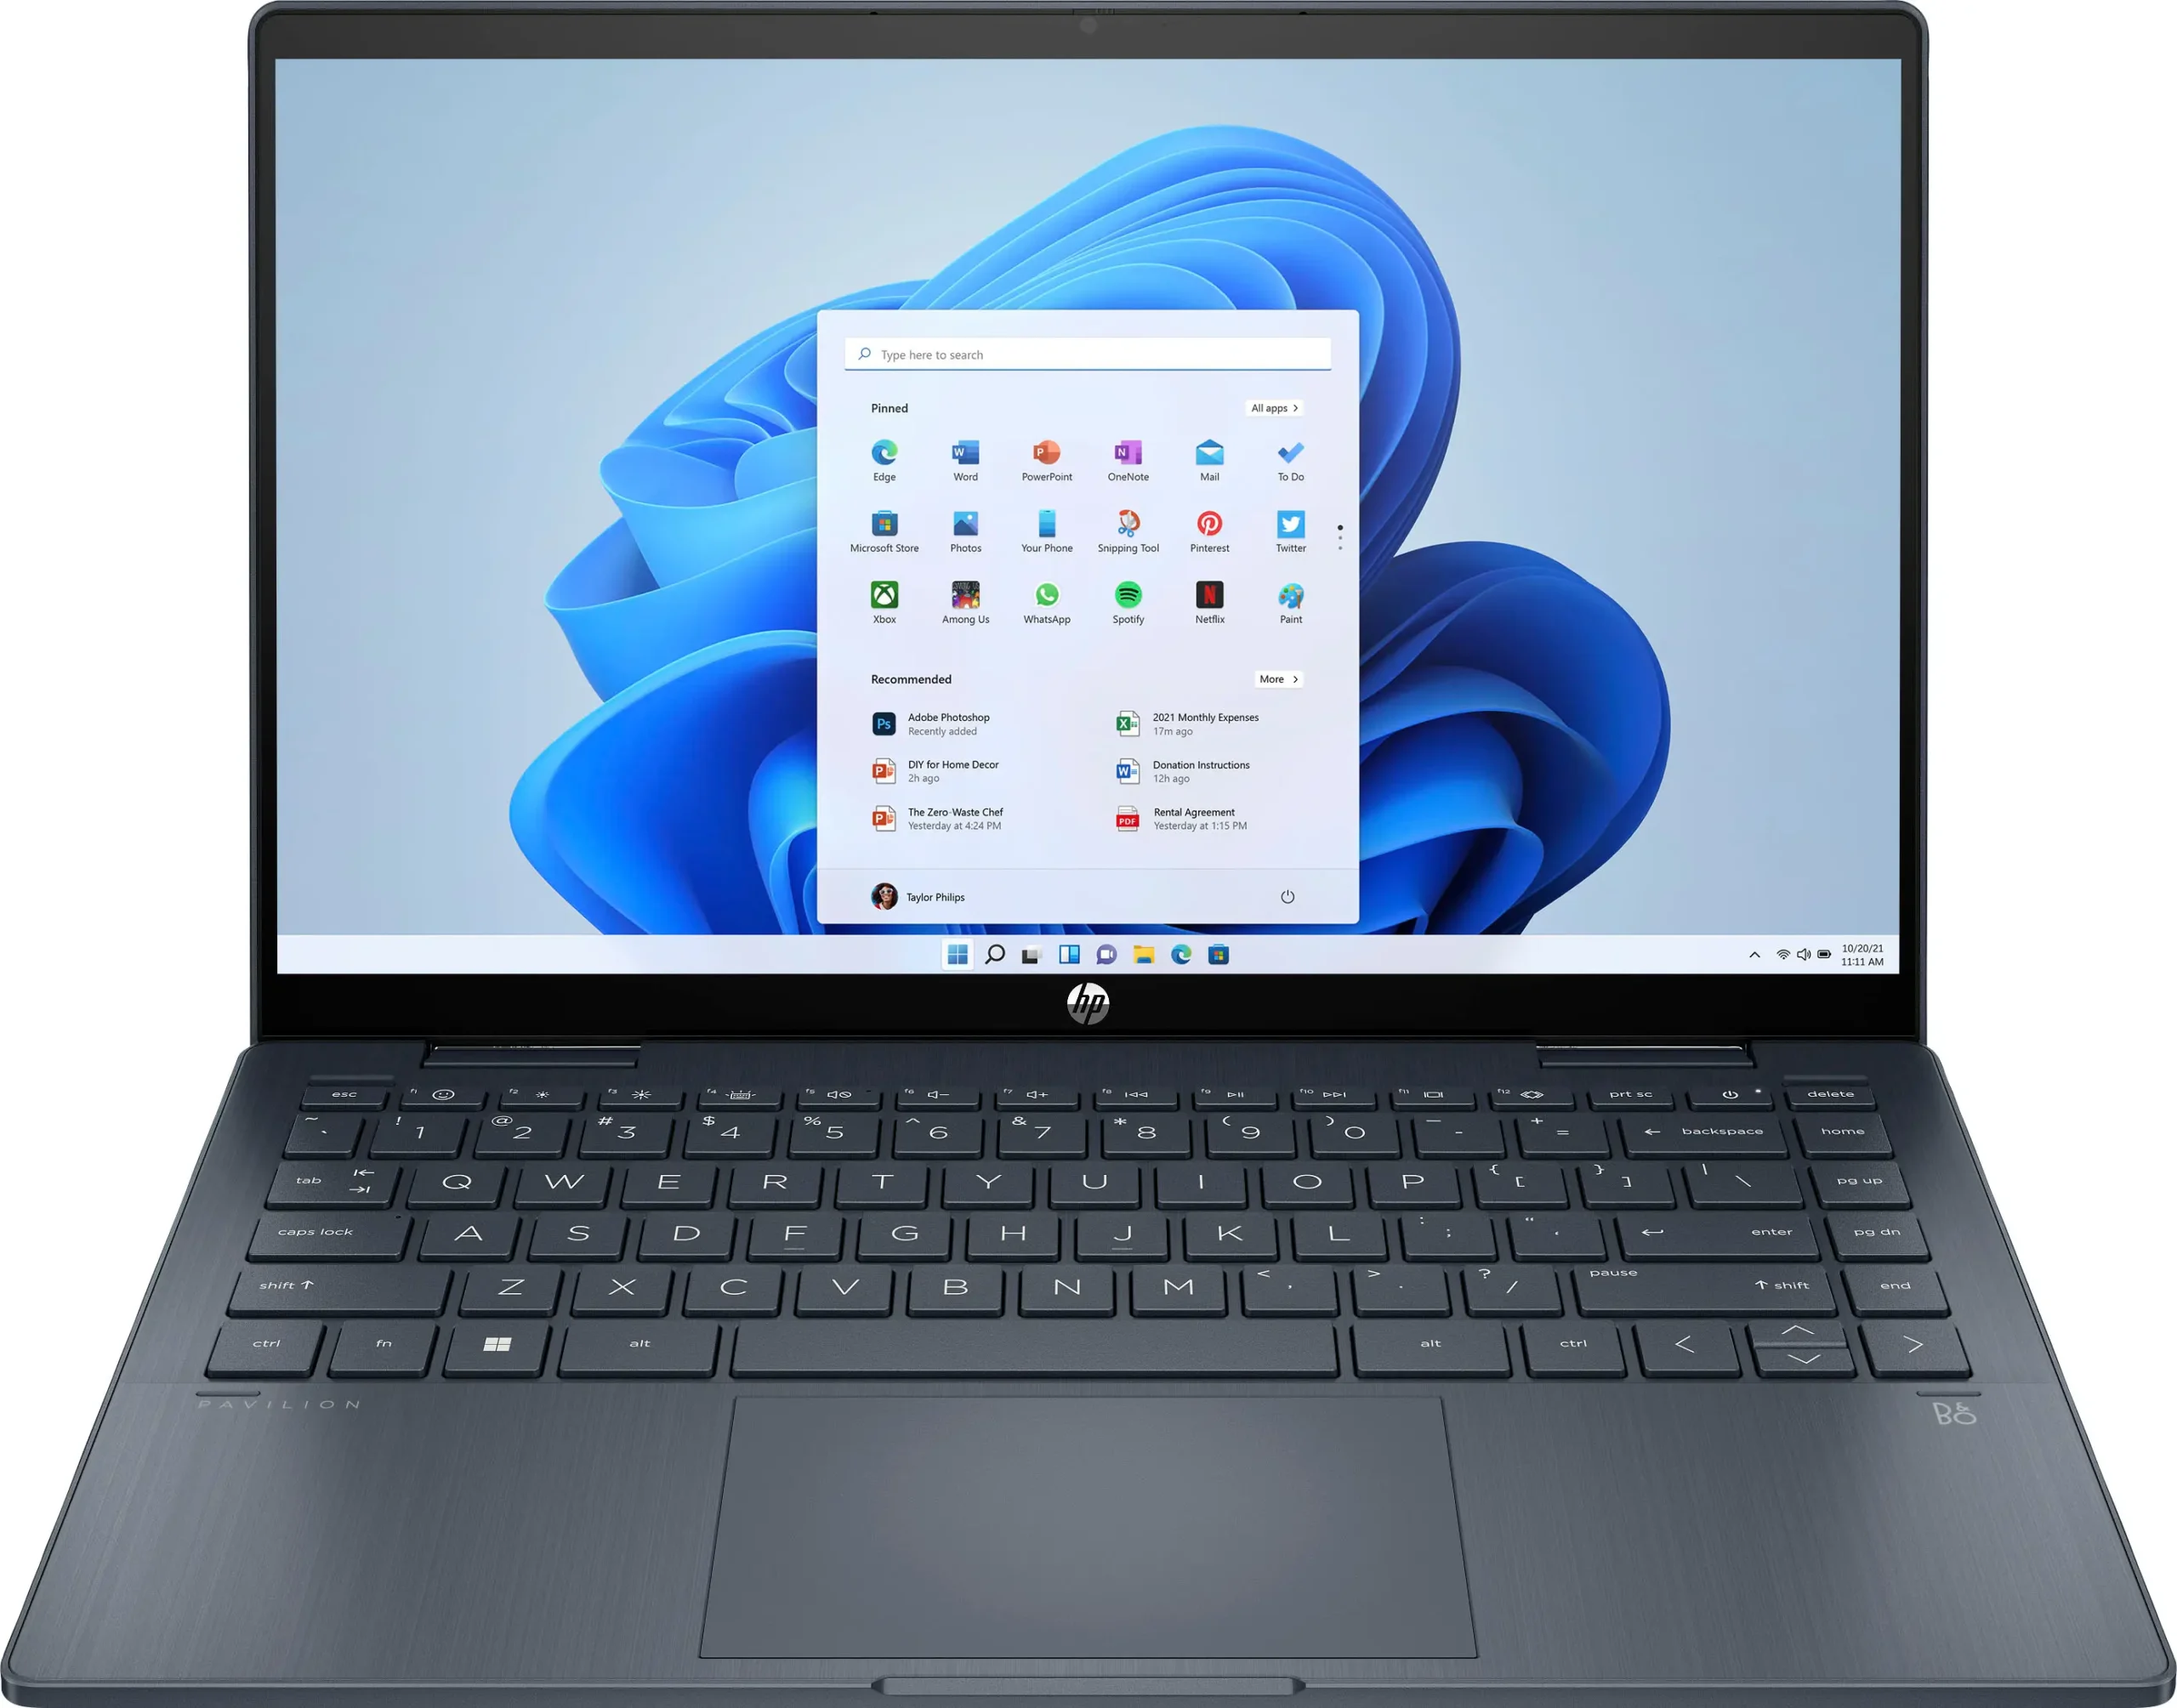 cheap hewlett packard laptops - Is HP a low end laptop